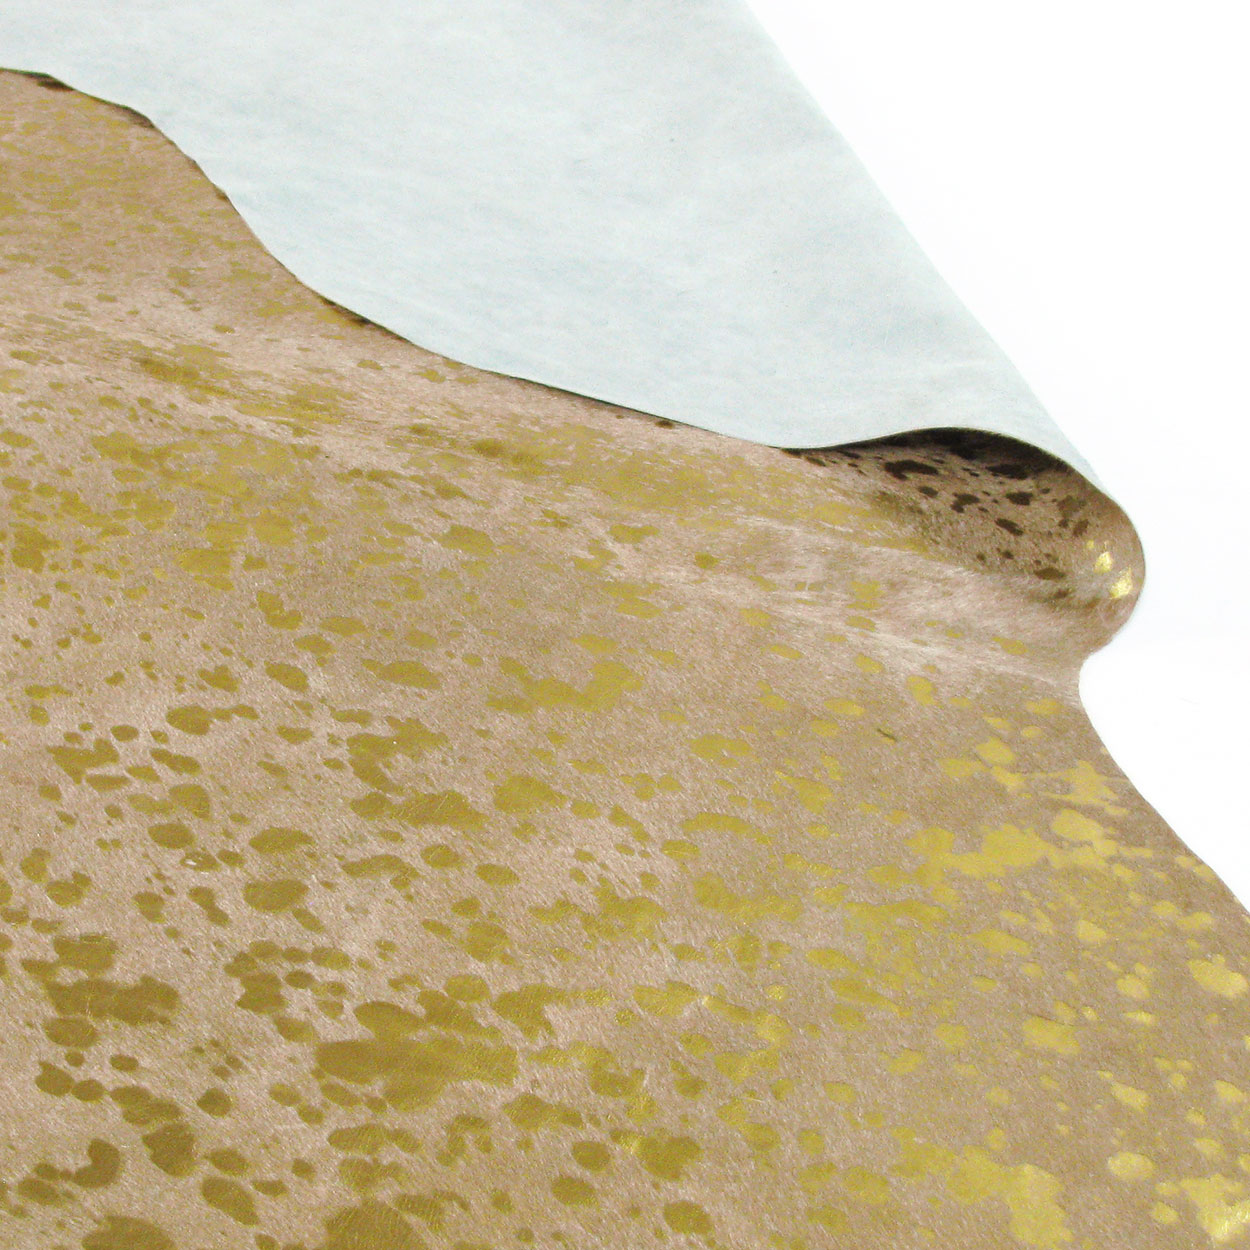 328001 - Color Splatter Metallic Gold on Tan Premium Cowhide